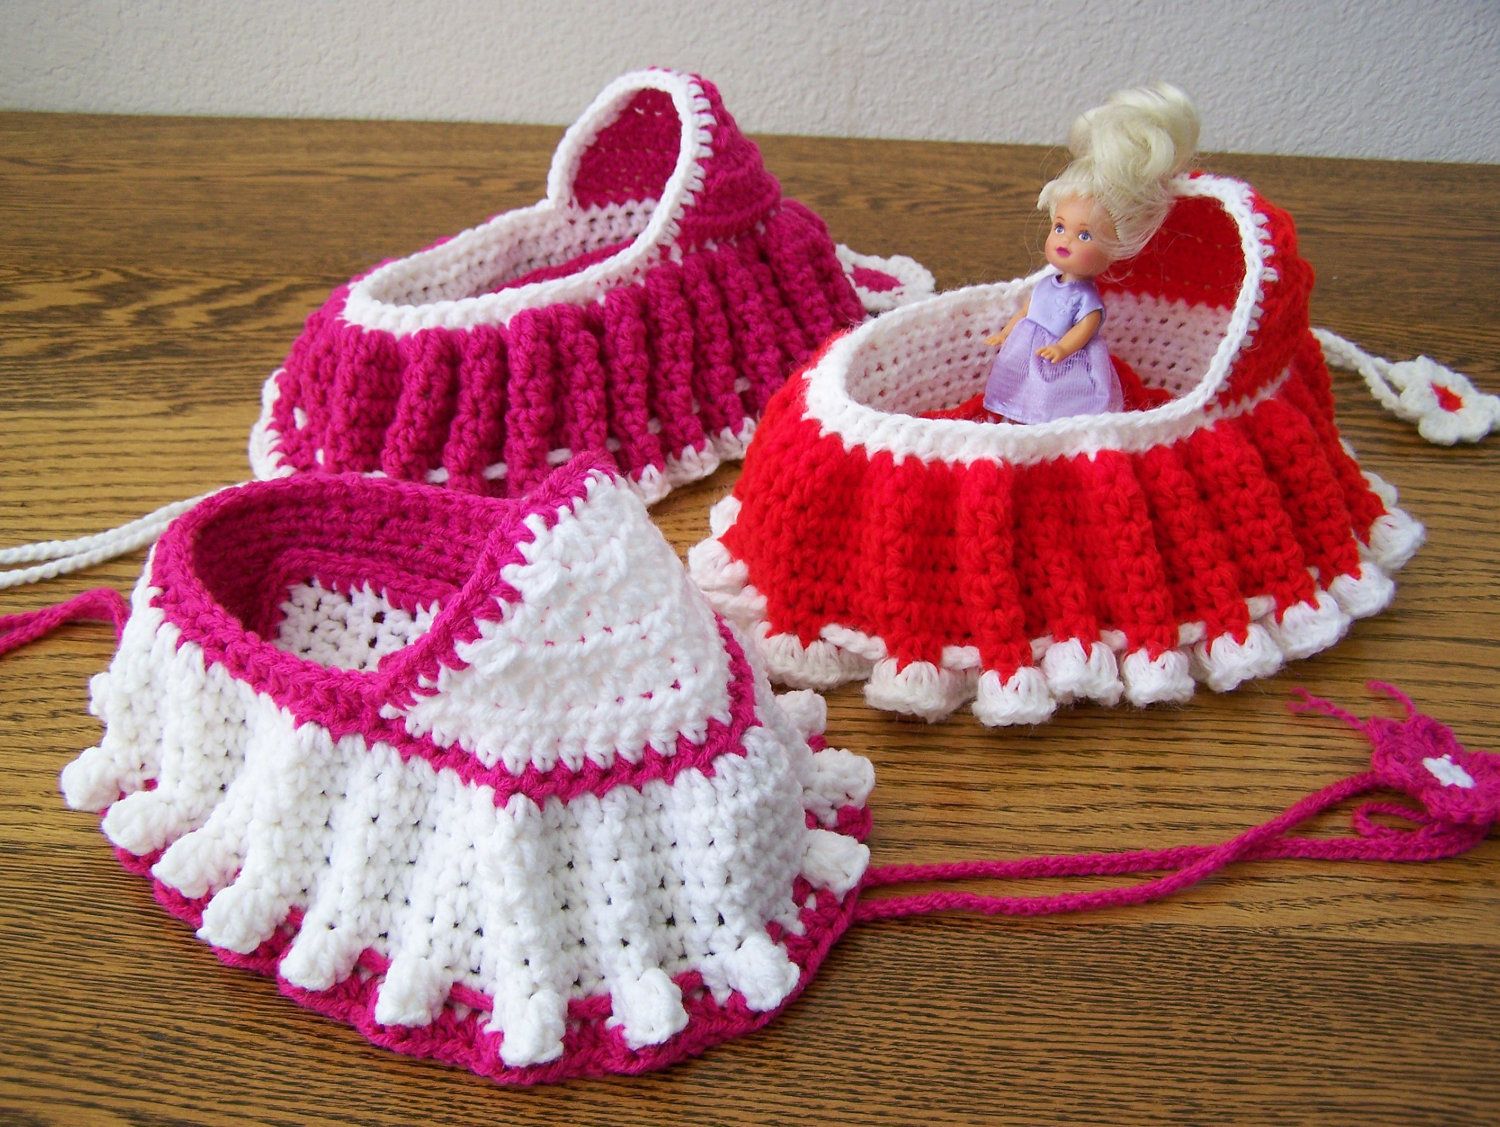 Crochet cradle purse pattern free